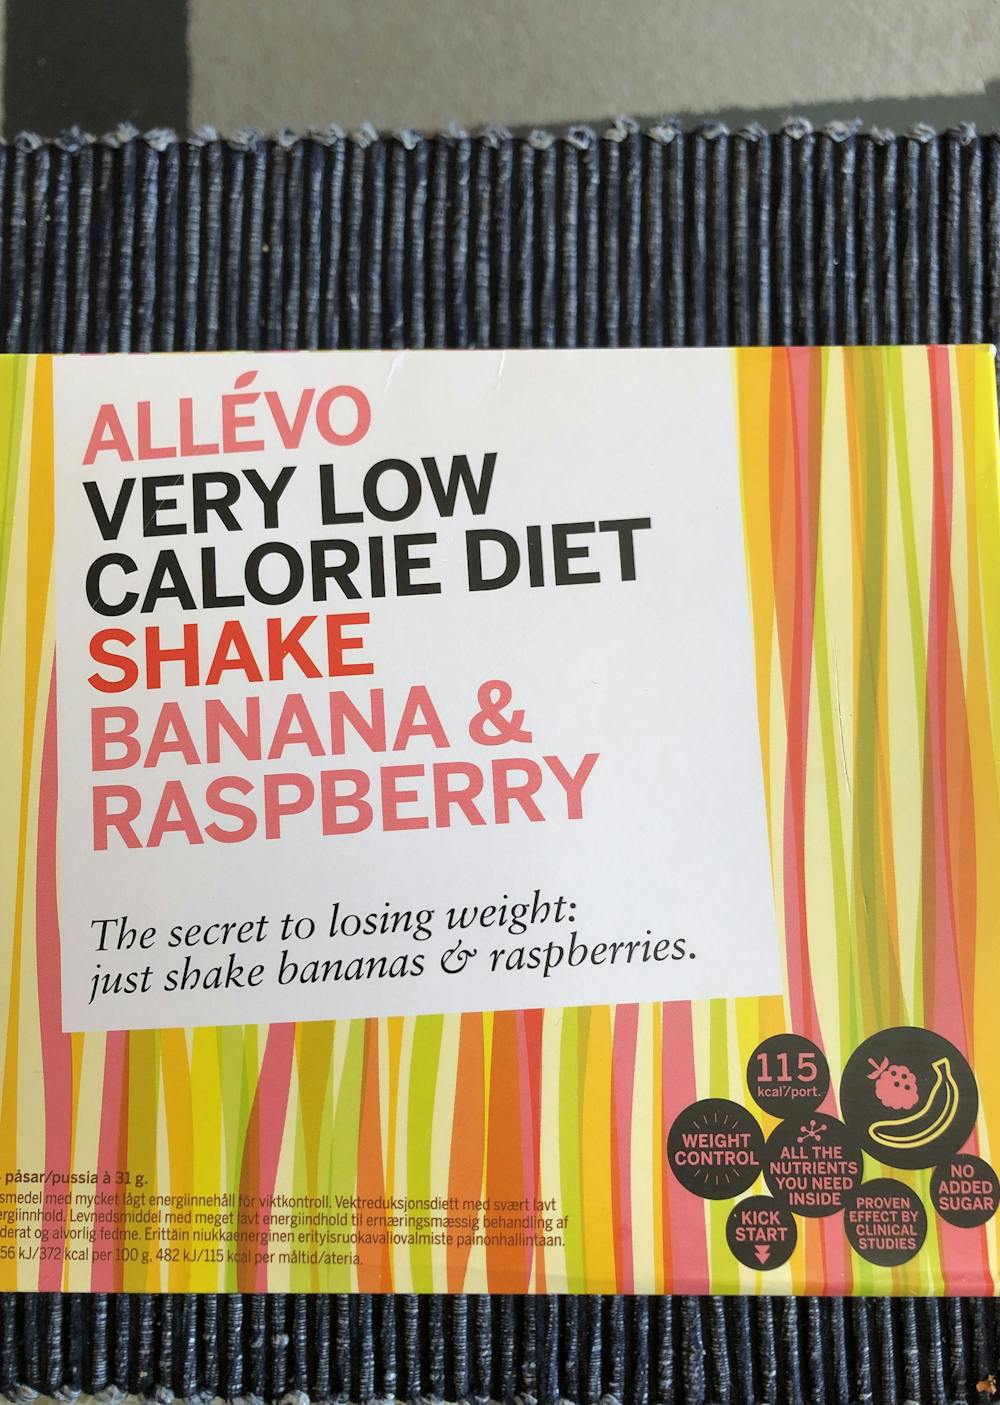 Very low calorie diet shake, banana & raspberry, Allévo